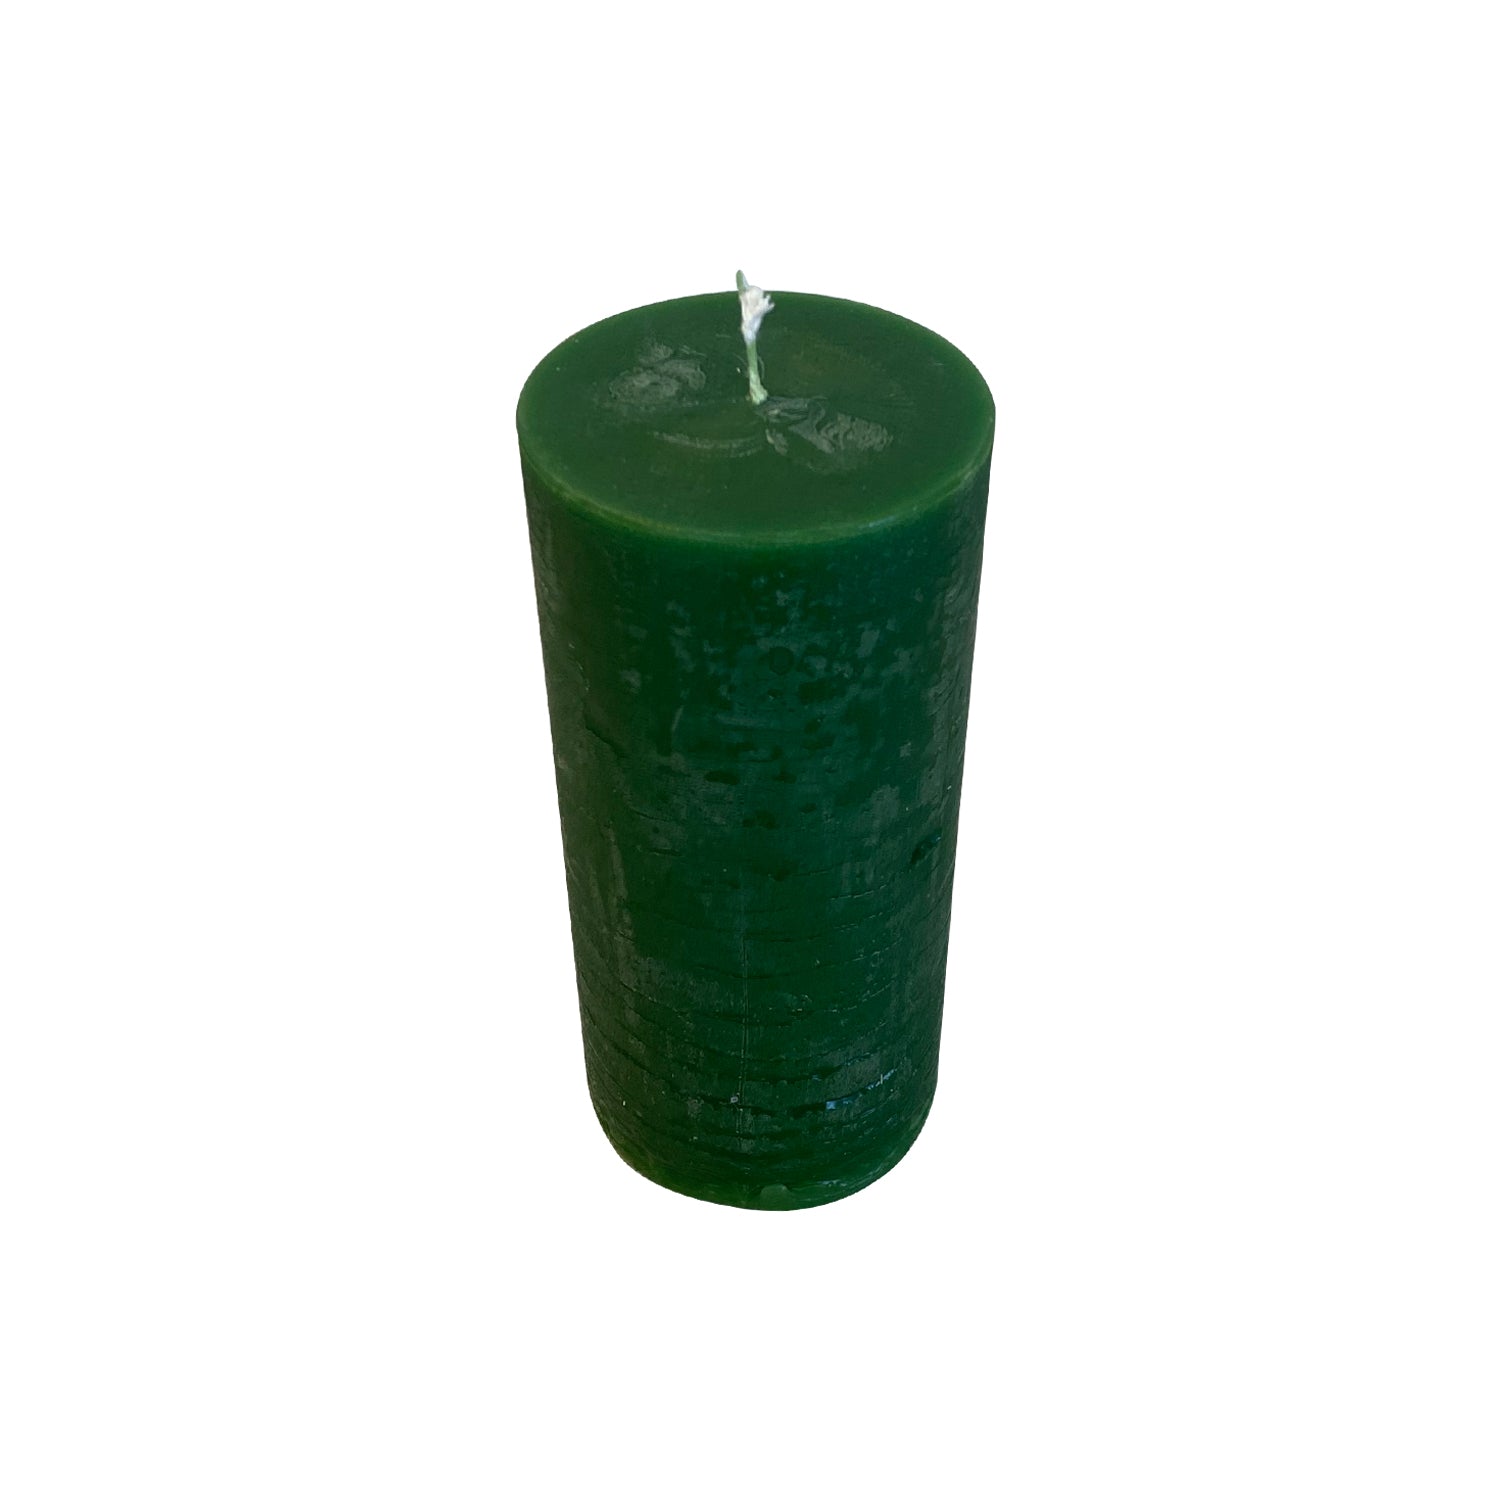 Blok lys - Grøn (7cm i diameter)